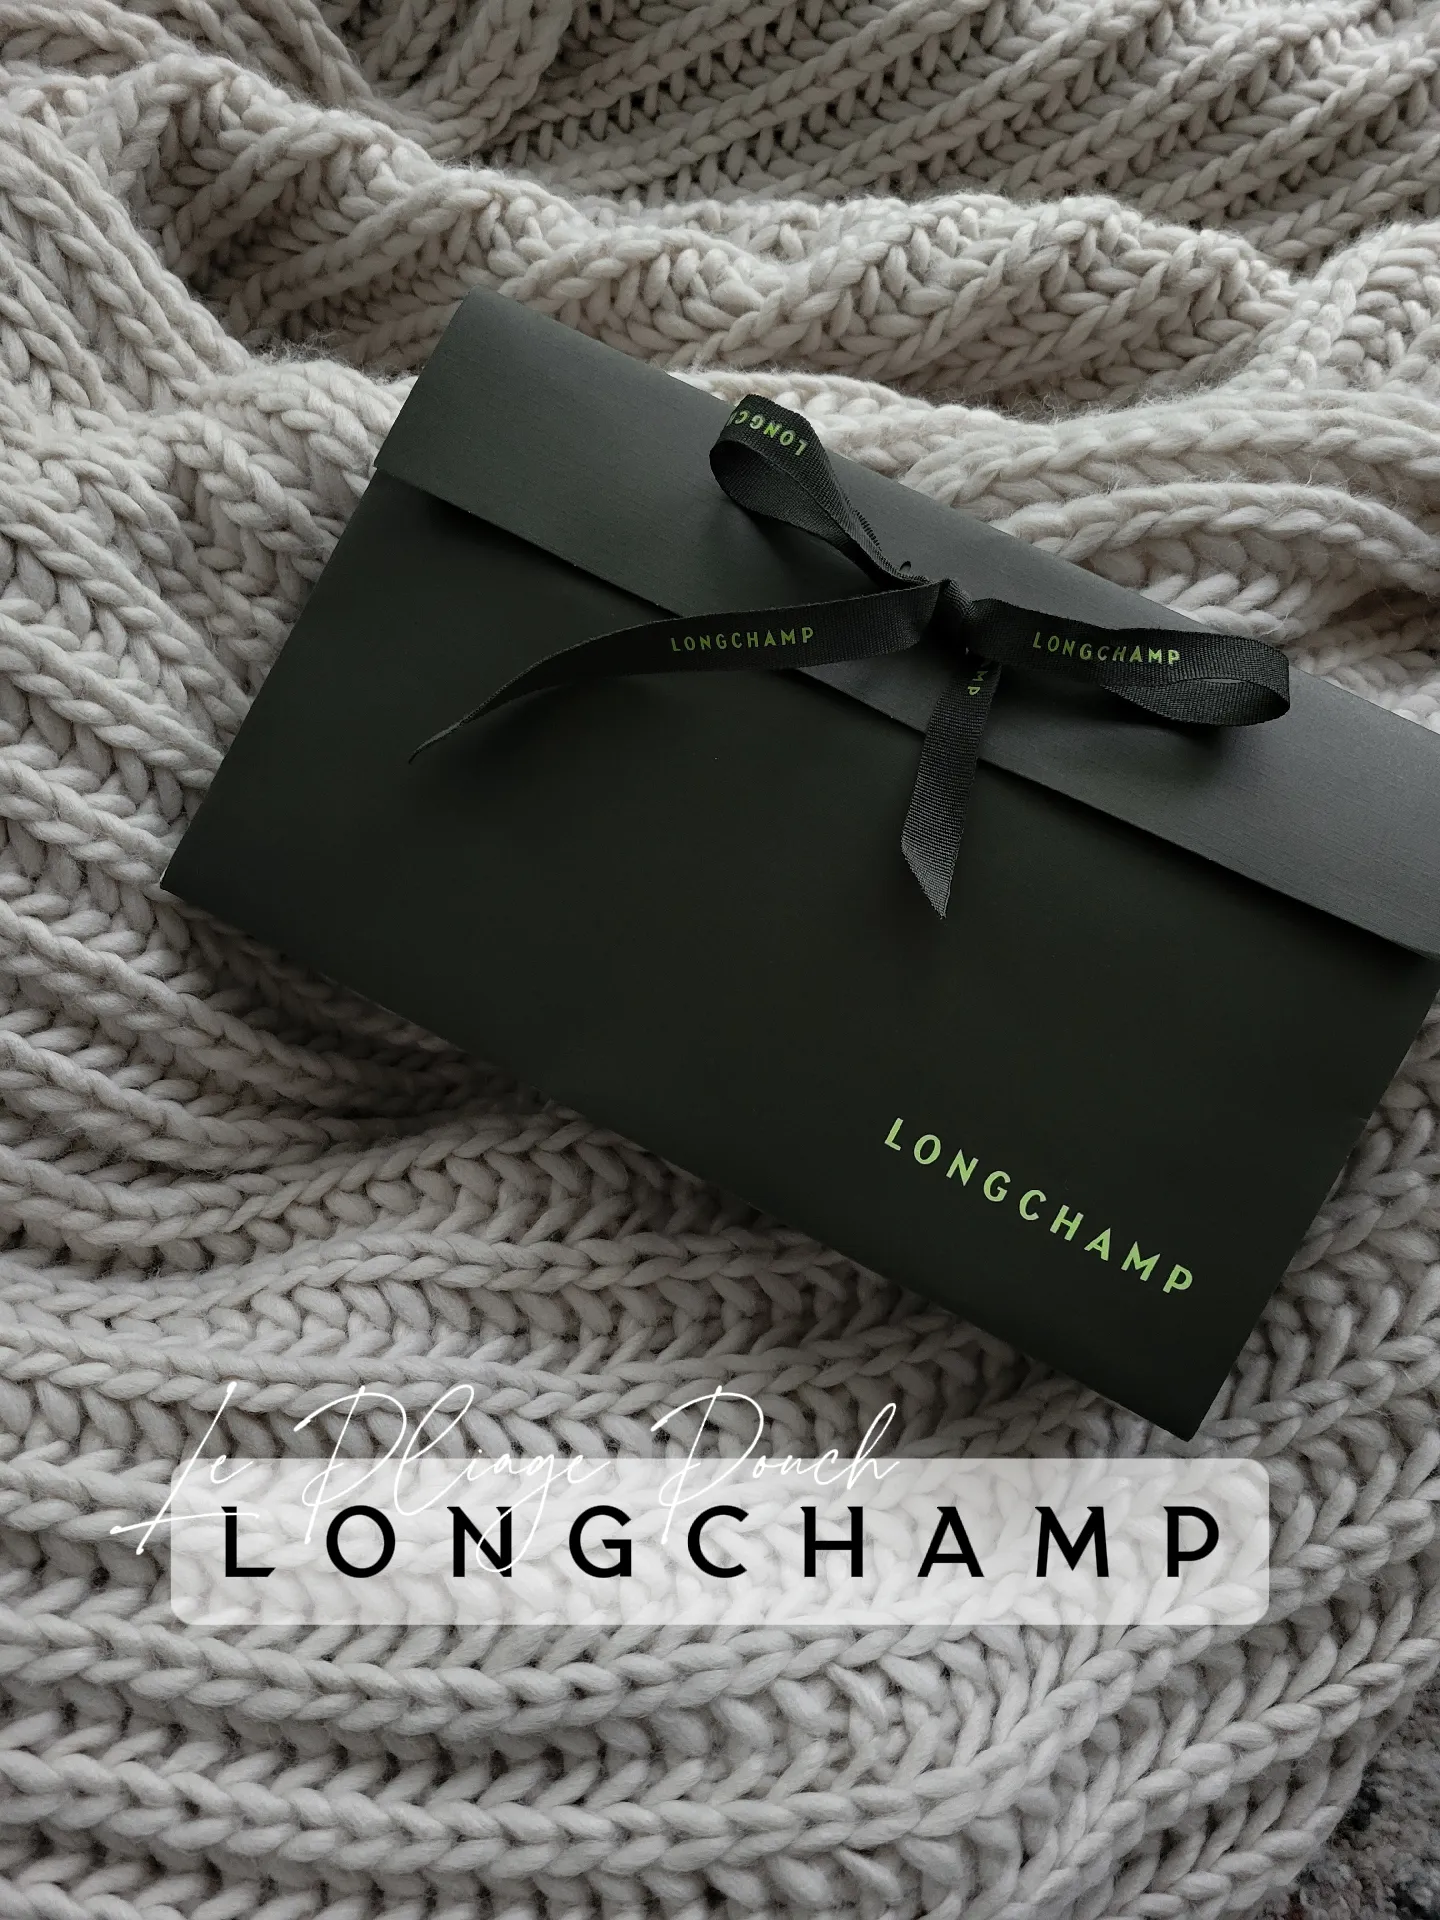 Longchamp mini pouch unboxing & What fits inside.